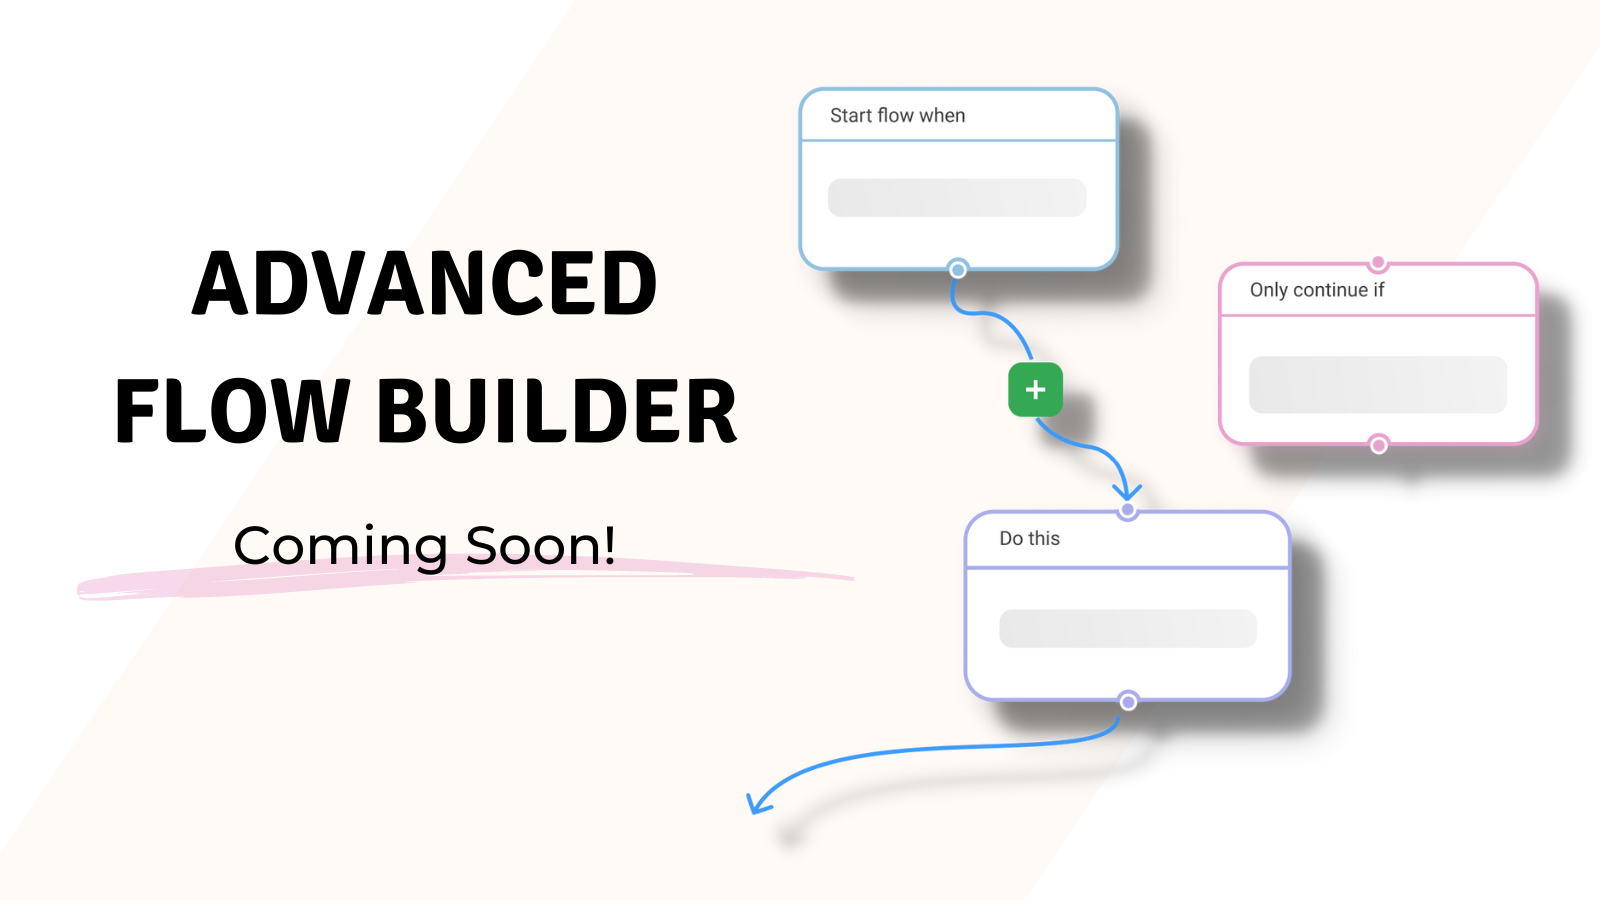 Advanced Flow Builder Coming Soon